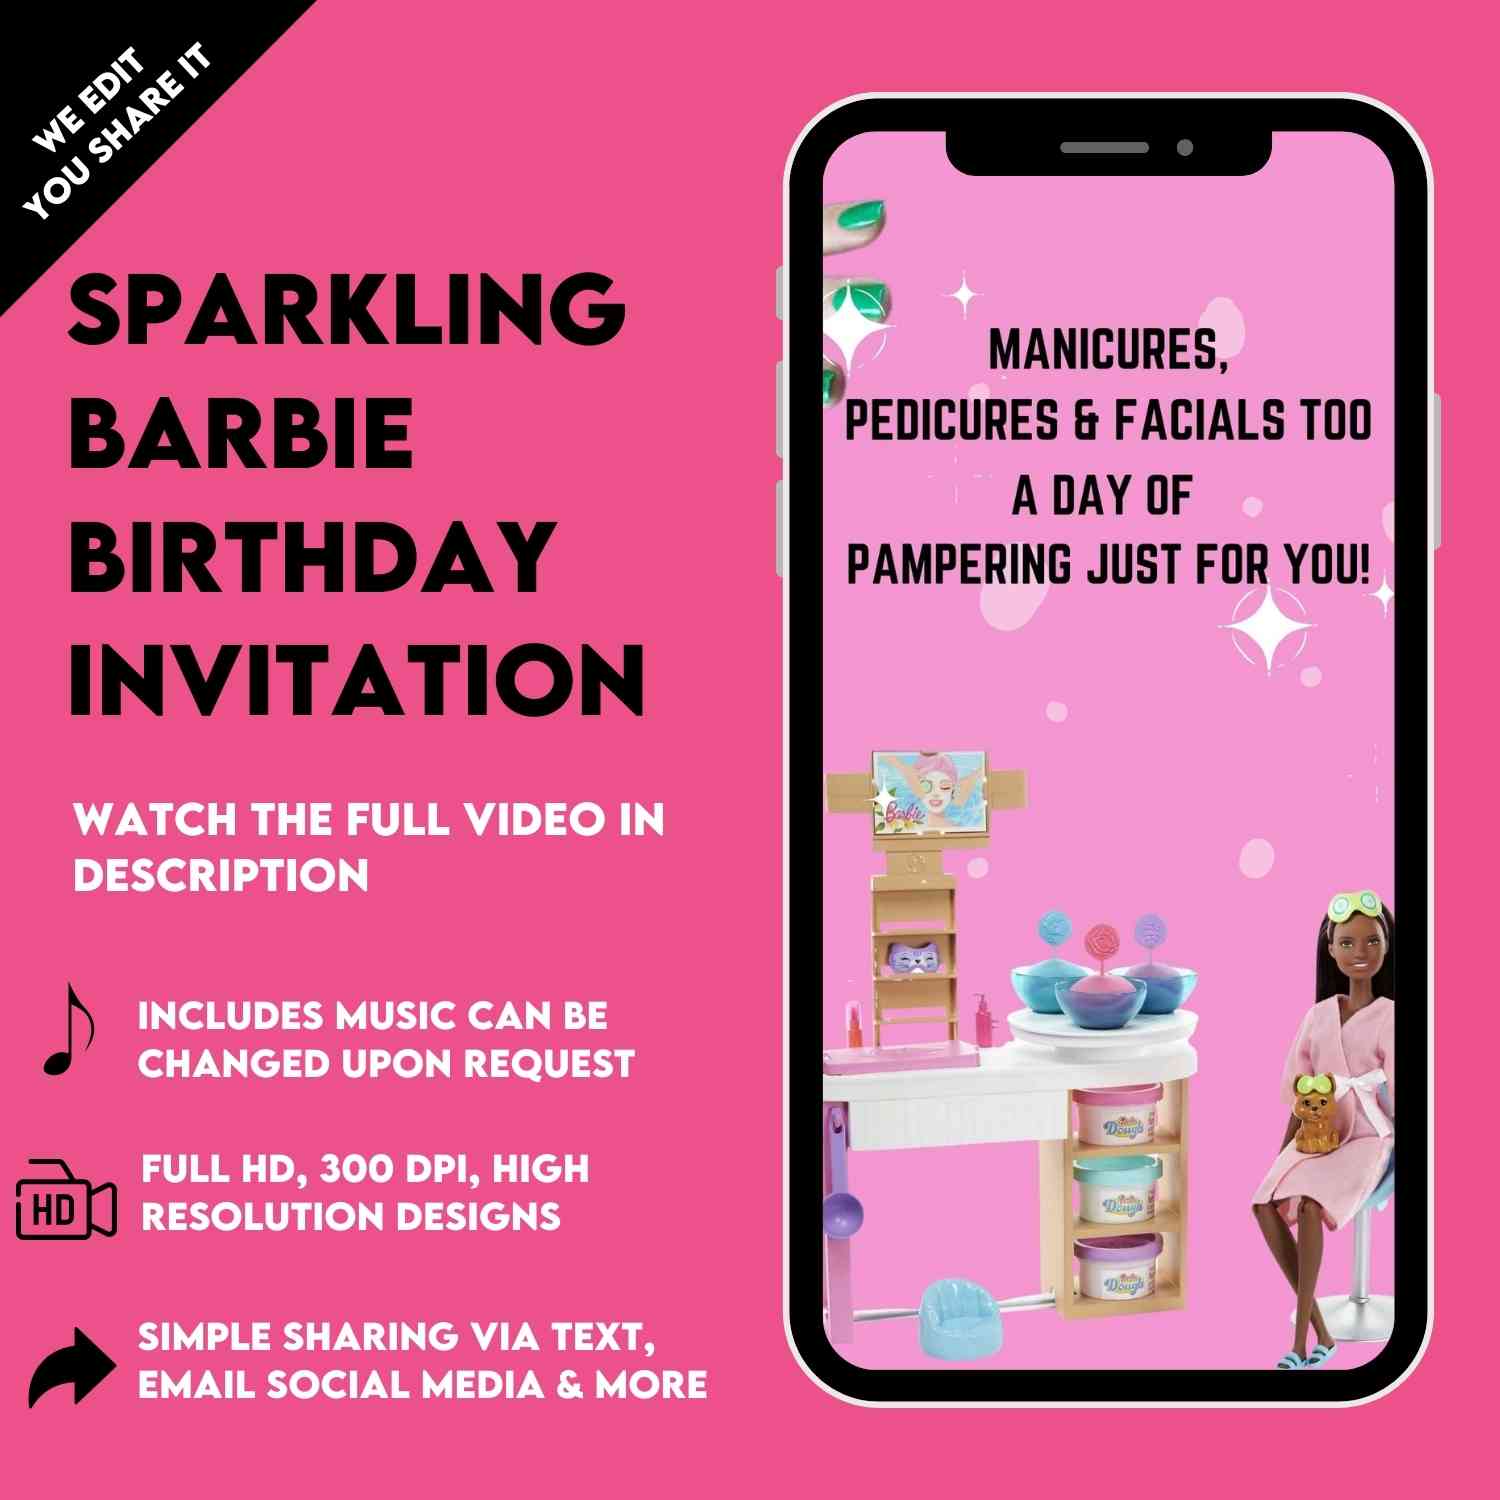 Sparkling Barbie Spa Birthday Video Invitation | Animated, Glamorous, and Fun-Filled Celebration!